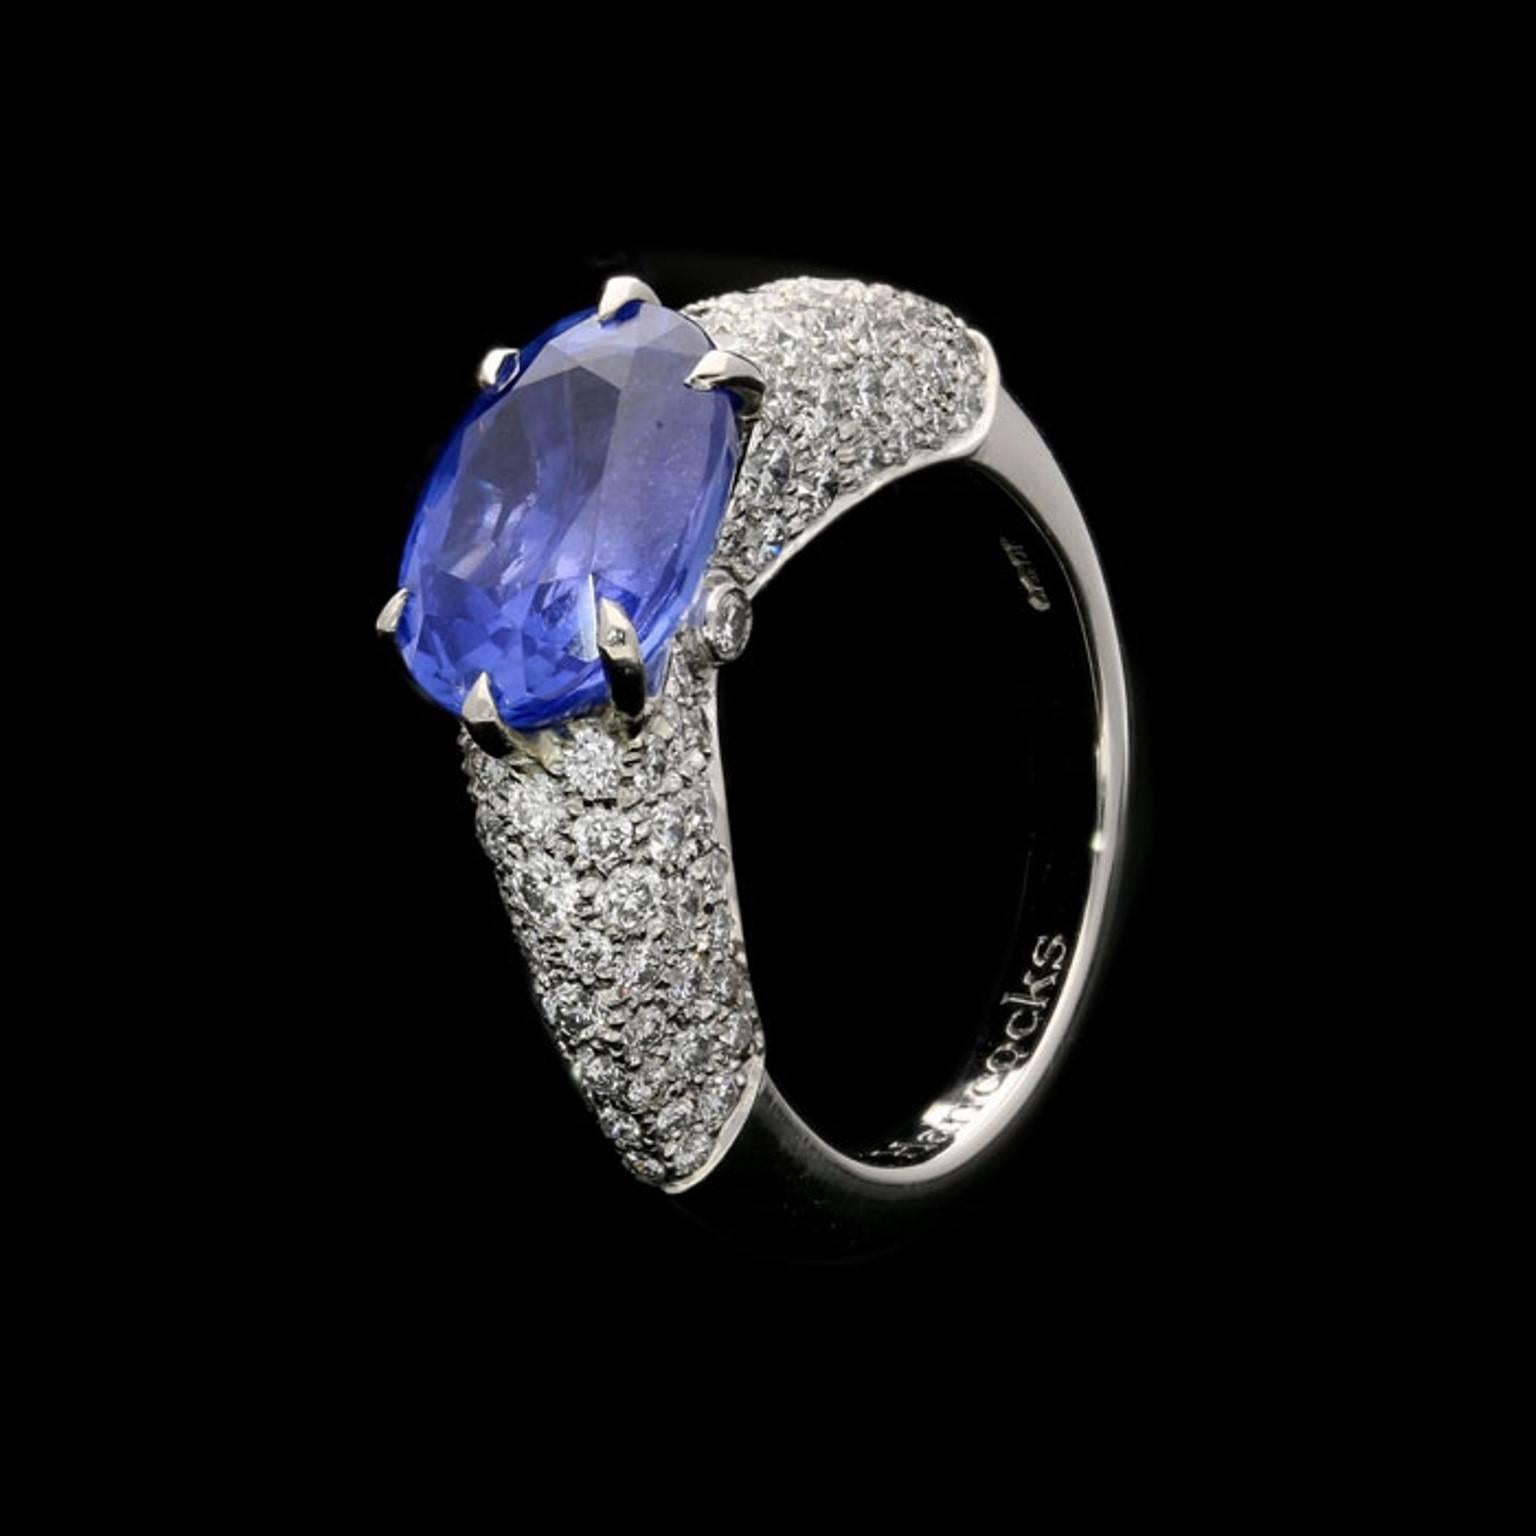 Oval Cut 4.76 Carat Sapphire Ring with Pavé Diamond-Set Raised Mount in Platinum